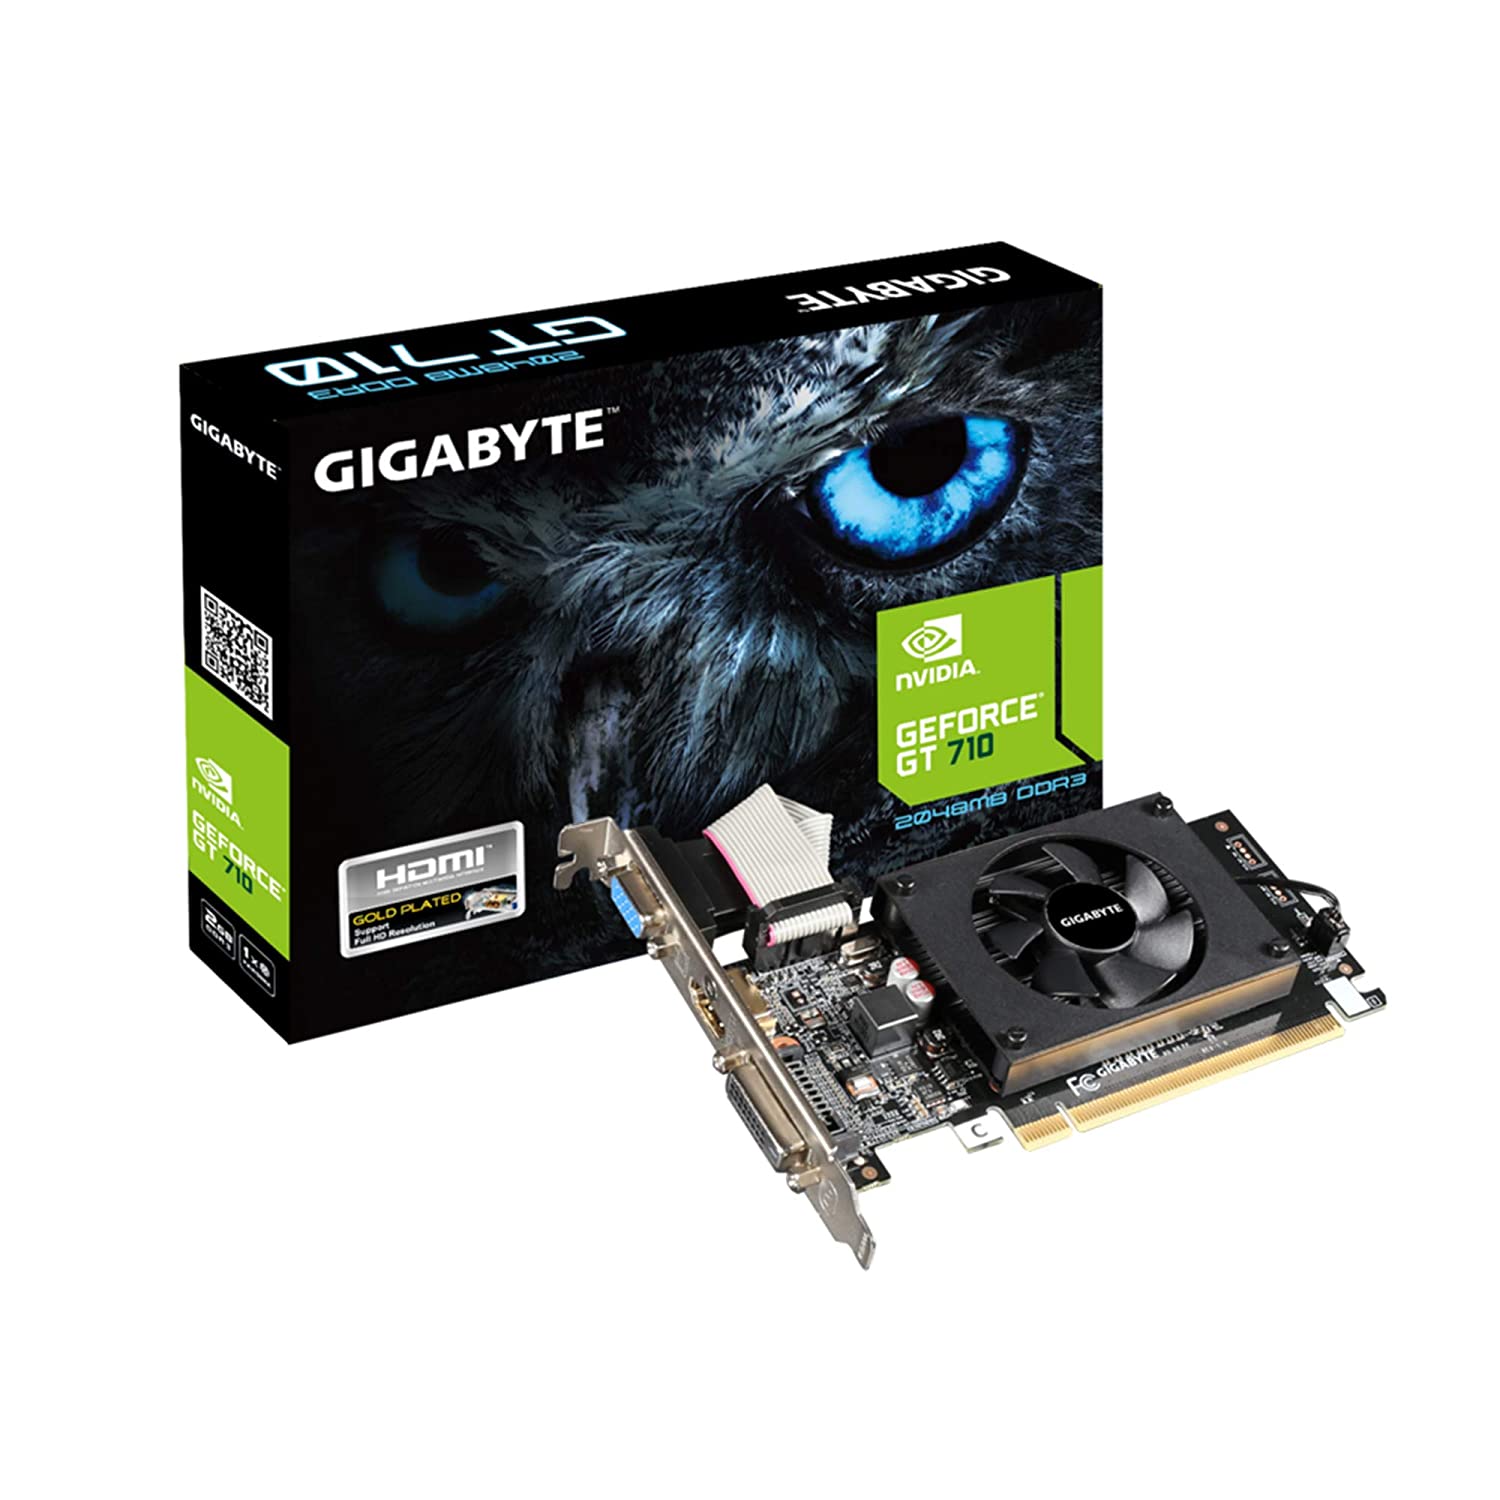 Gigabyte Geforce GT 710 2GB DDR5 graphics card under 5000 - ur computer technics